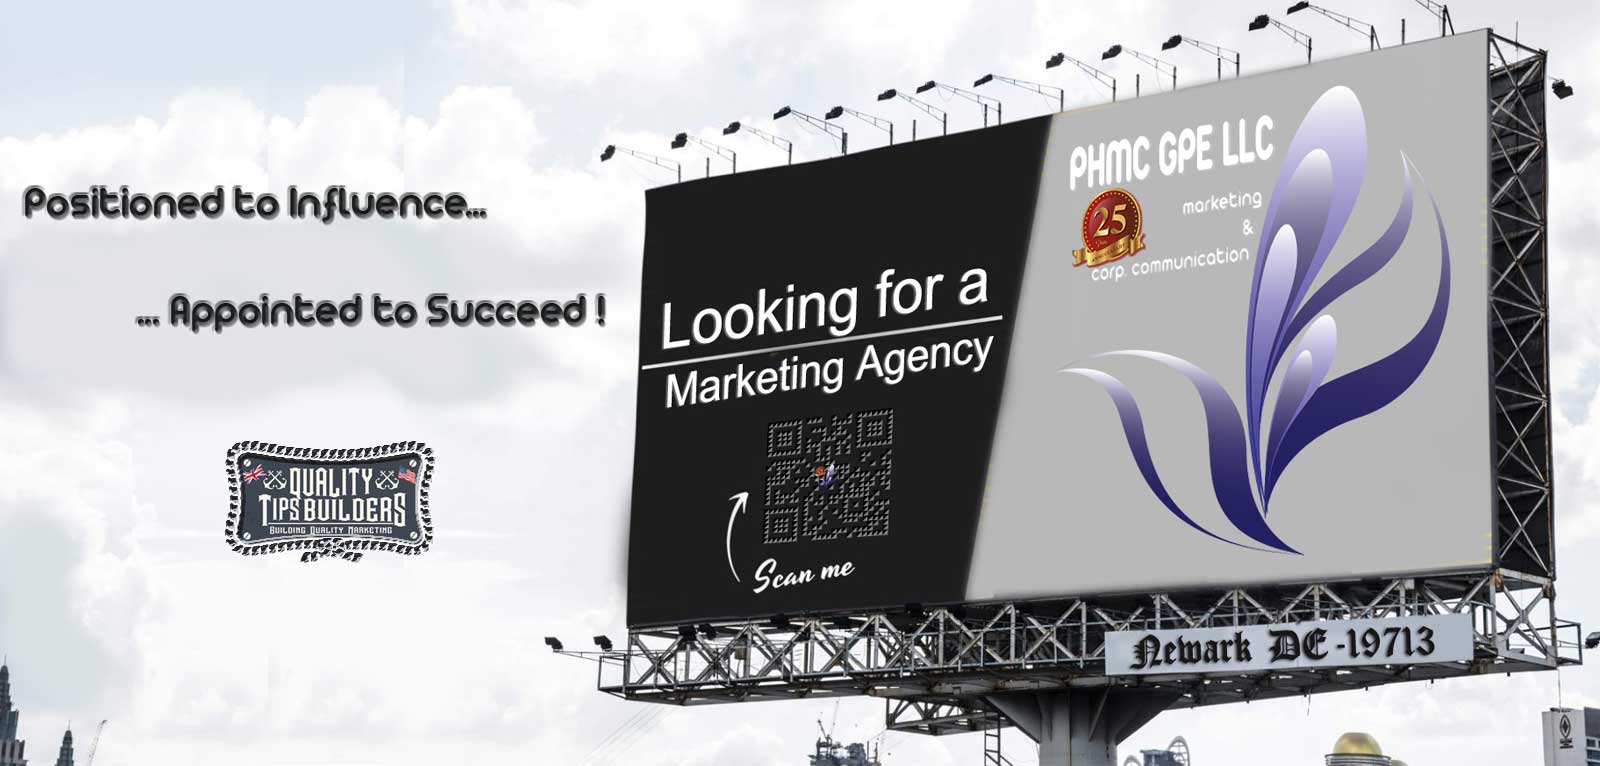 Agency_Site Home | ::: PHMC GPE LLC :::: Marketing & Corp. Communication Agency